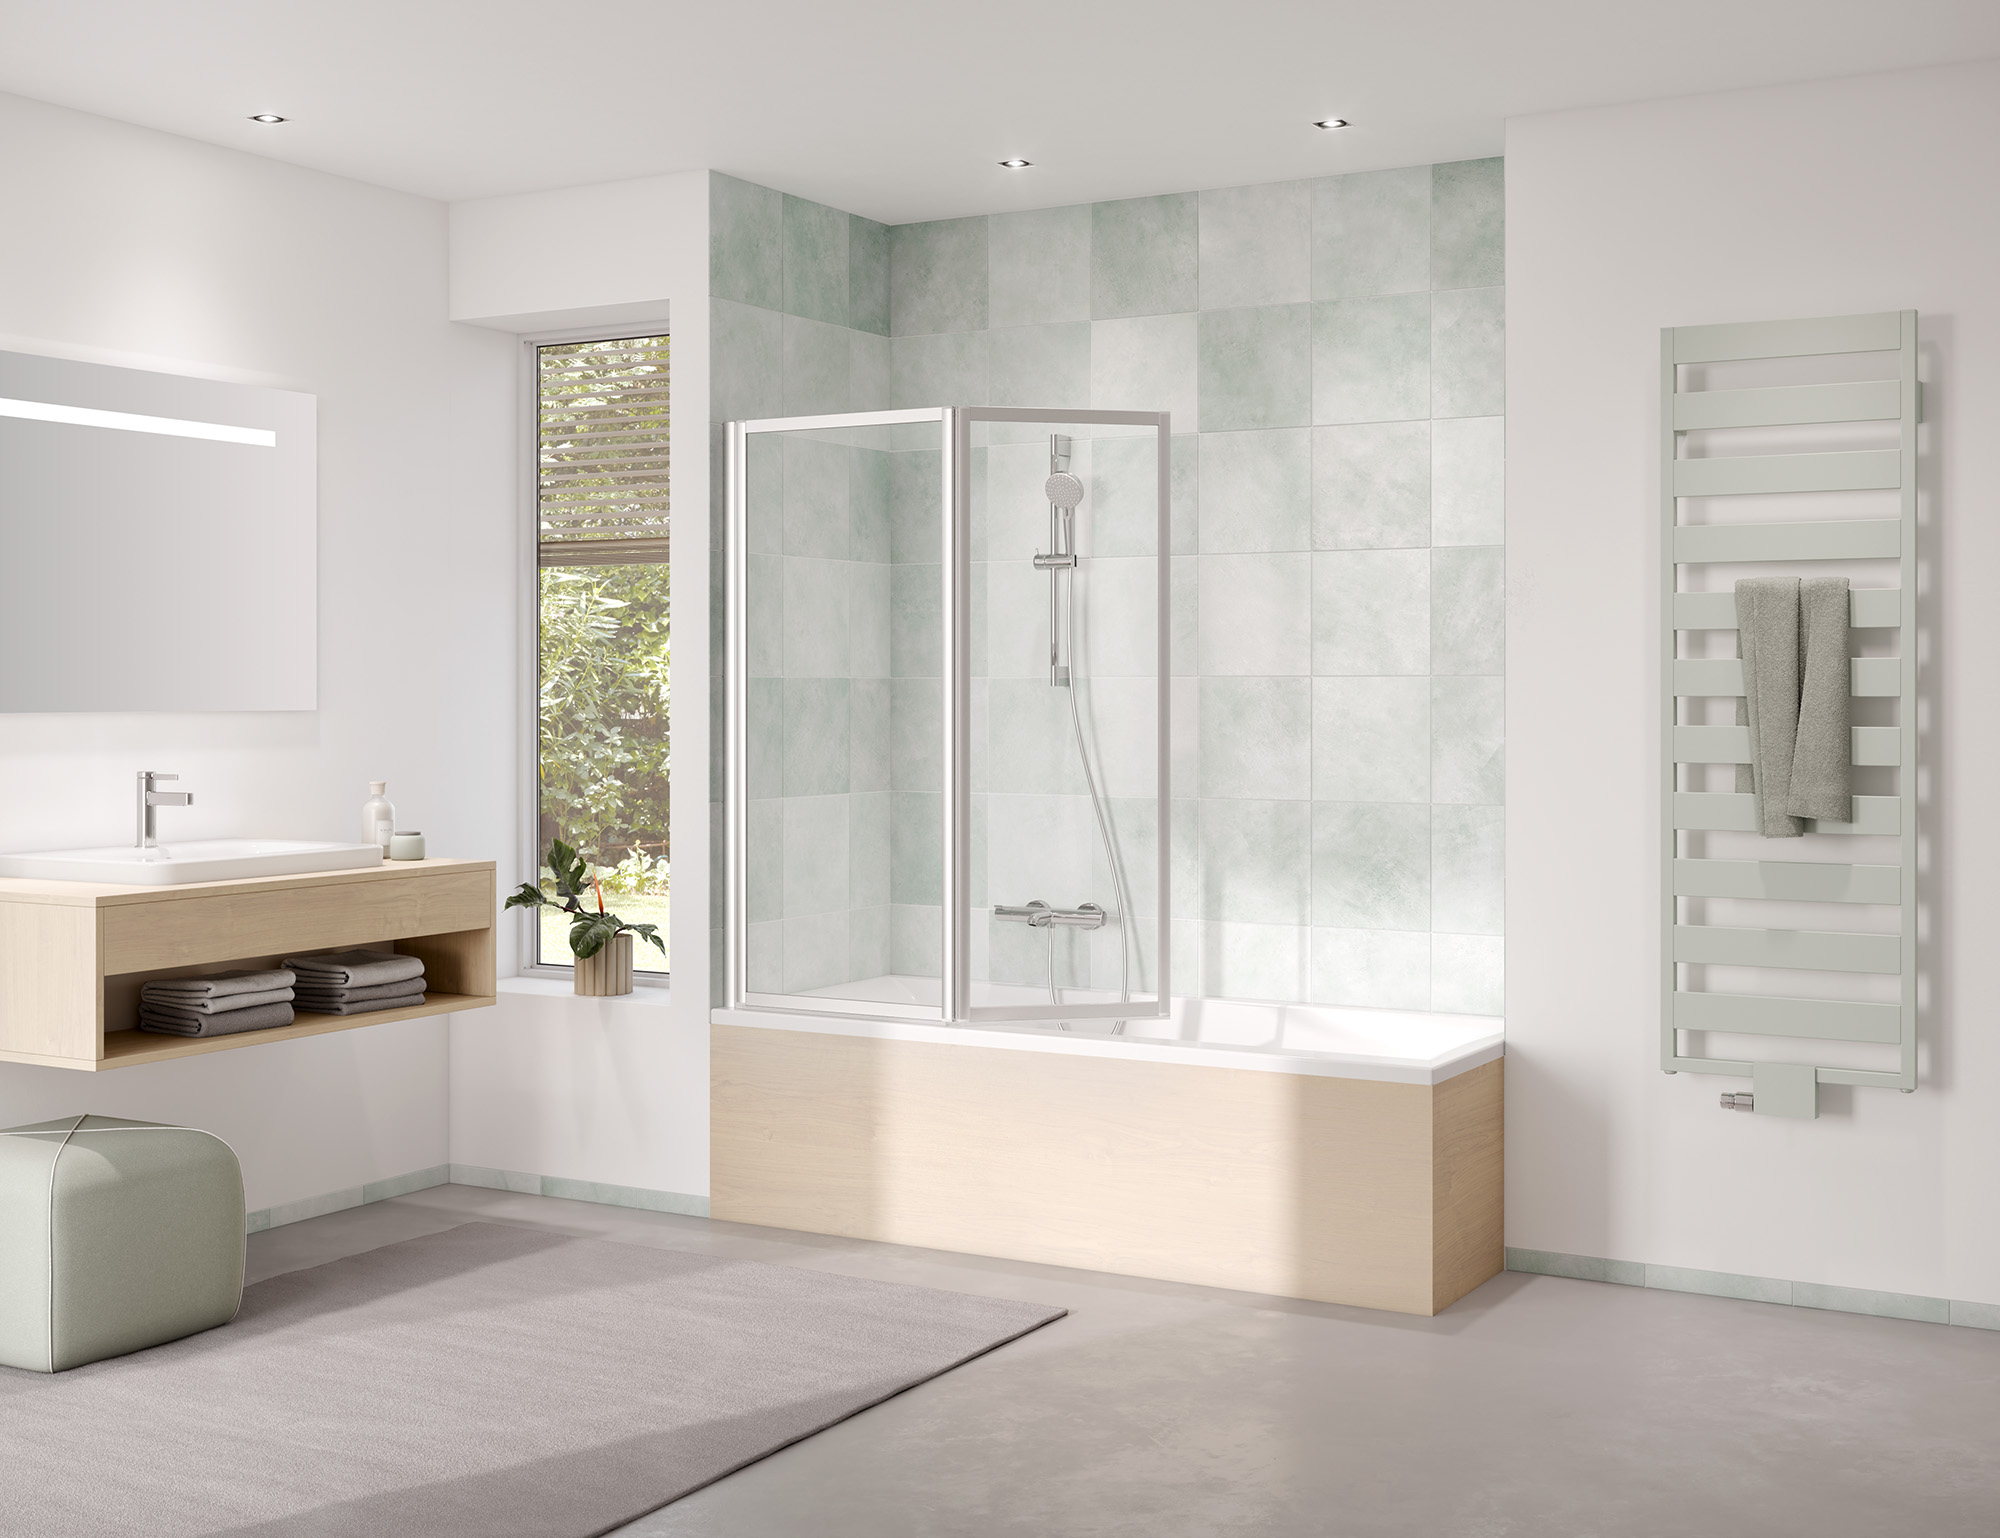 Kermi shower enclosure for bathtub VARIO 2000 two panel folding screen on bathtub